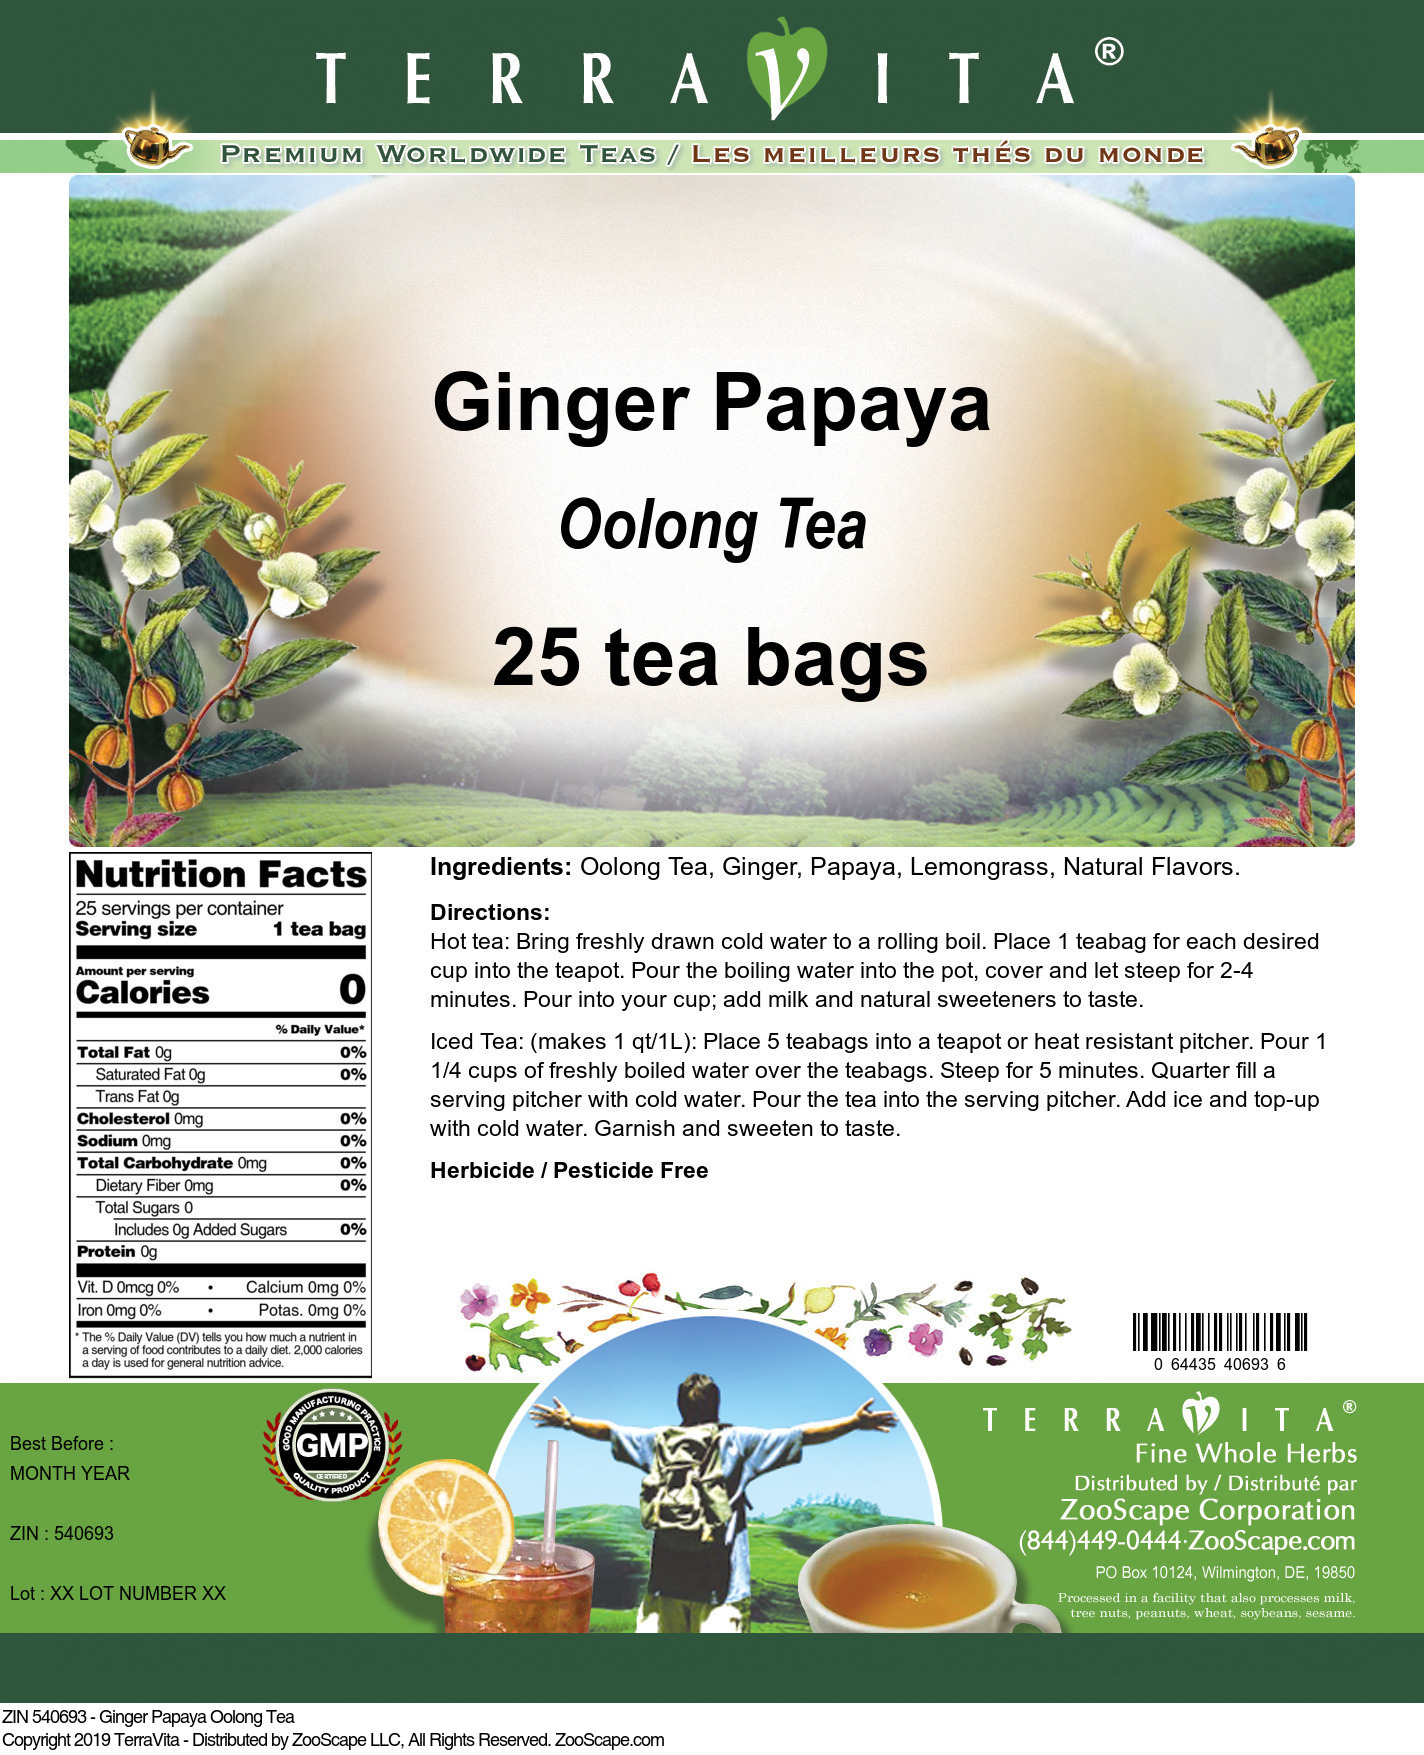 Ginger Papaya Oolong Tea - Label